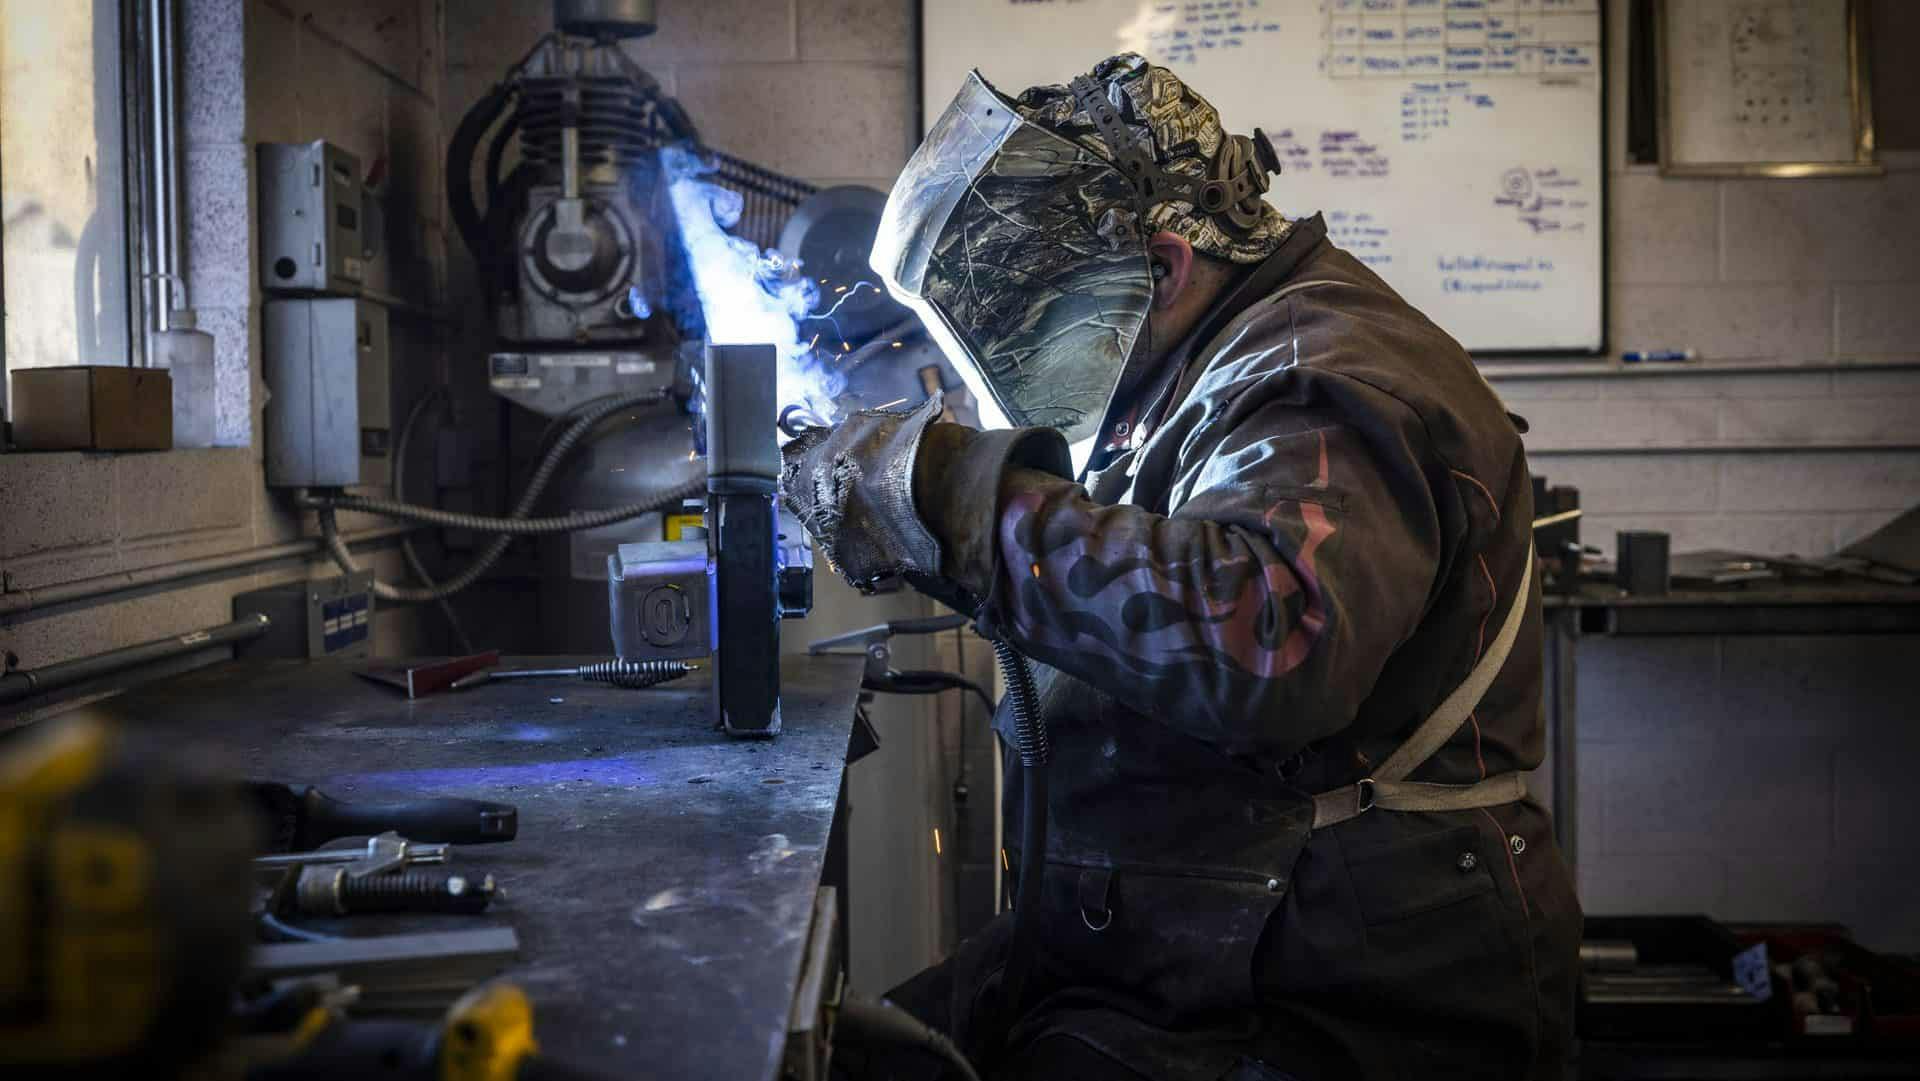 A welder crafting a 2" x 2" steel frame for a teardrop trailer build.